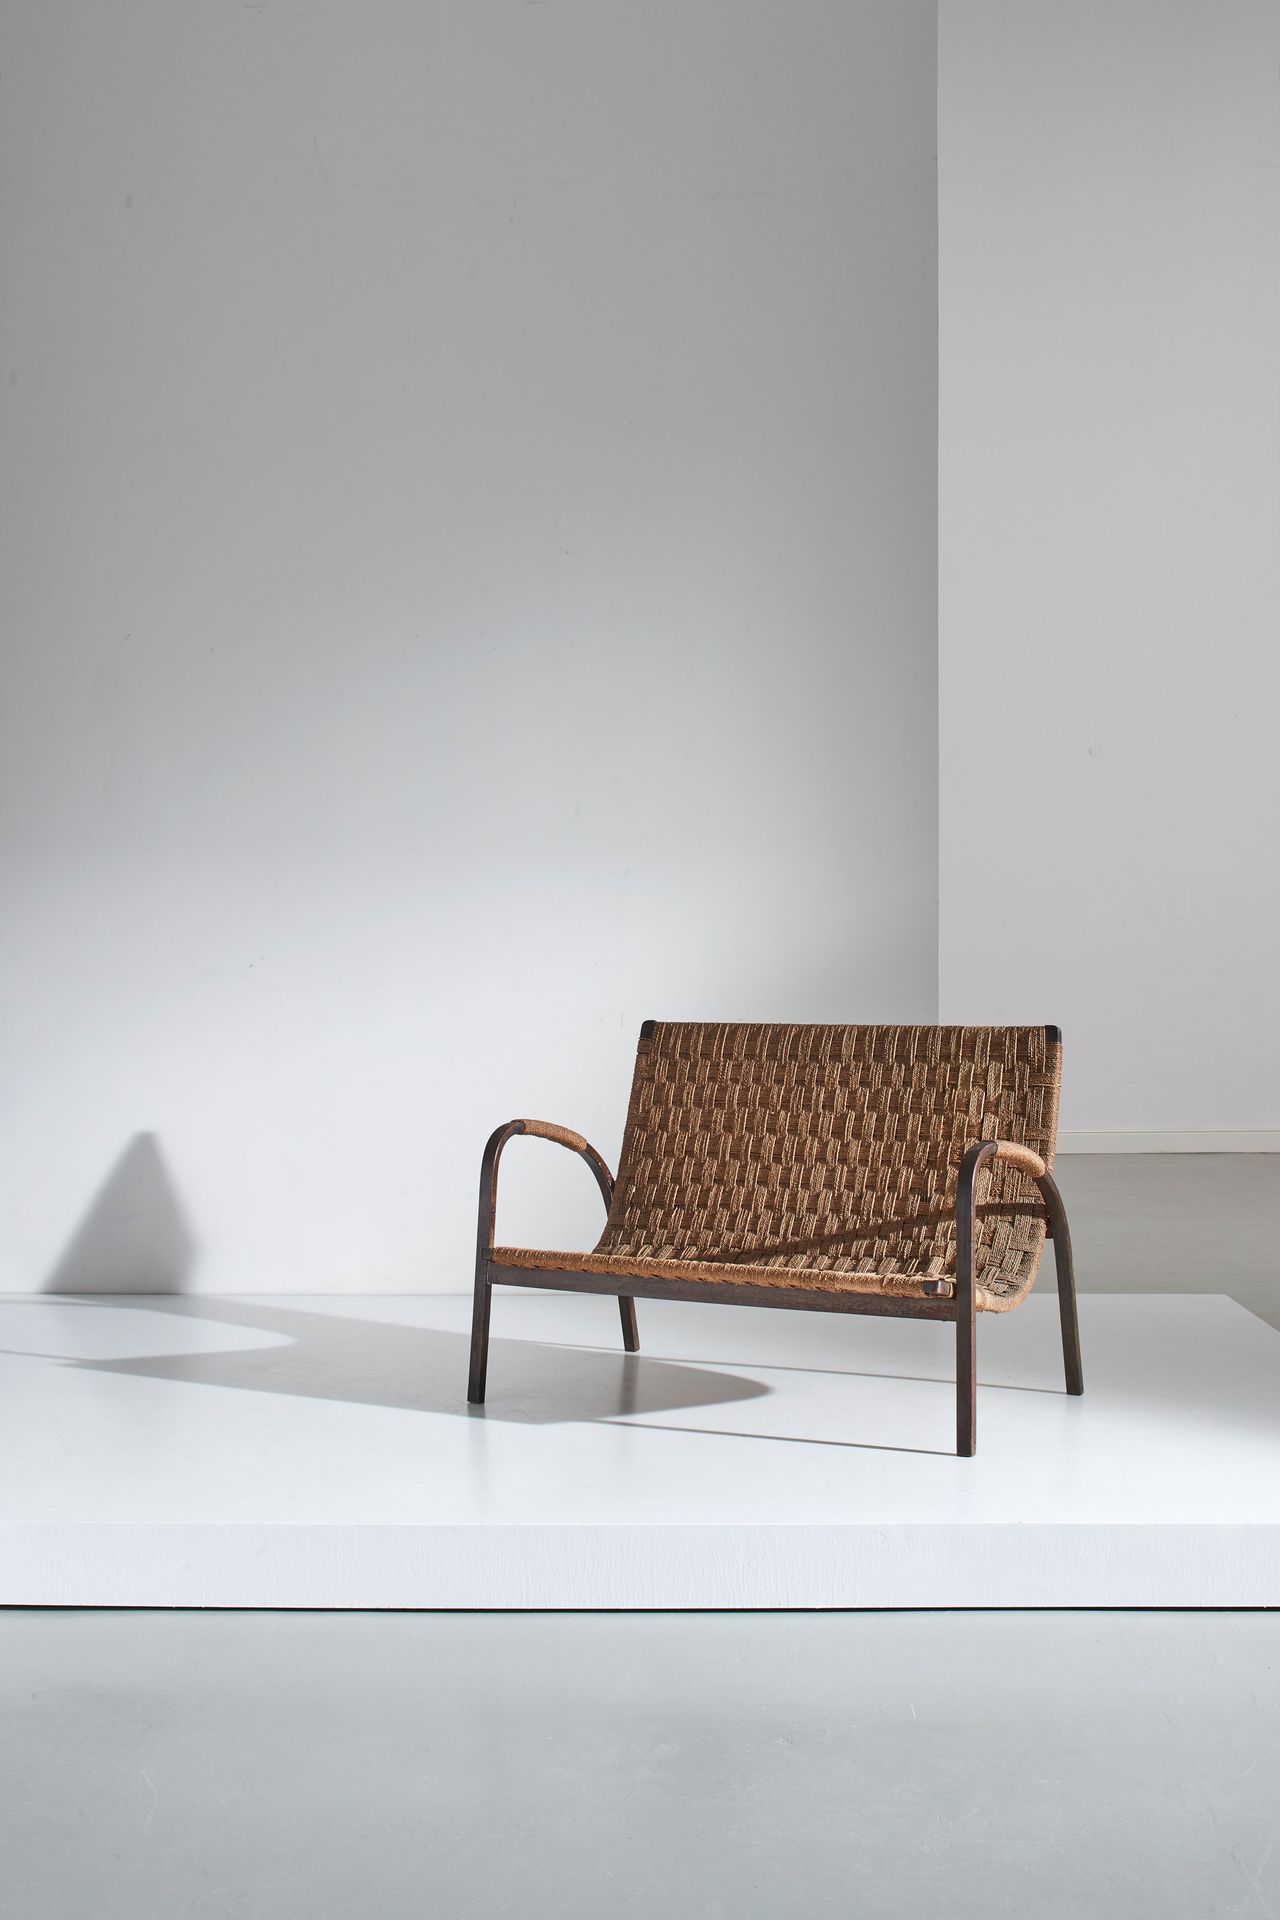 LUIGI RICCI 现代主义沙发。弯曲的榉木，编织的麻绳。
cm 81x114x78
A MODERNIST SETTEE BY L. RICCI



状&hellip;